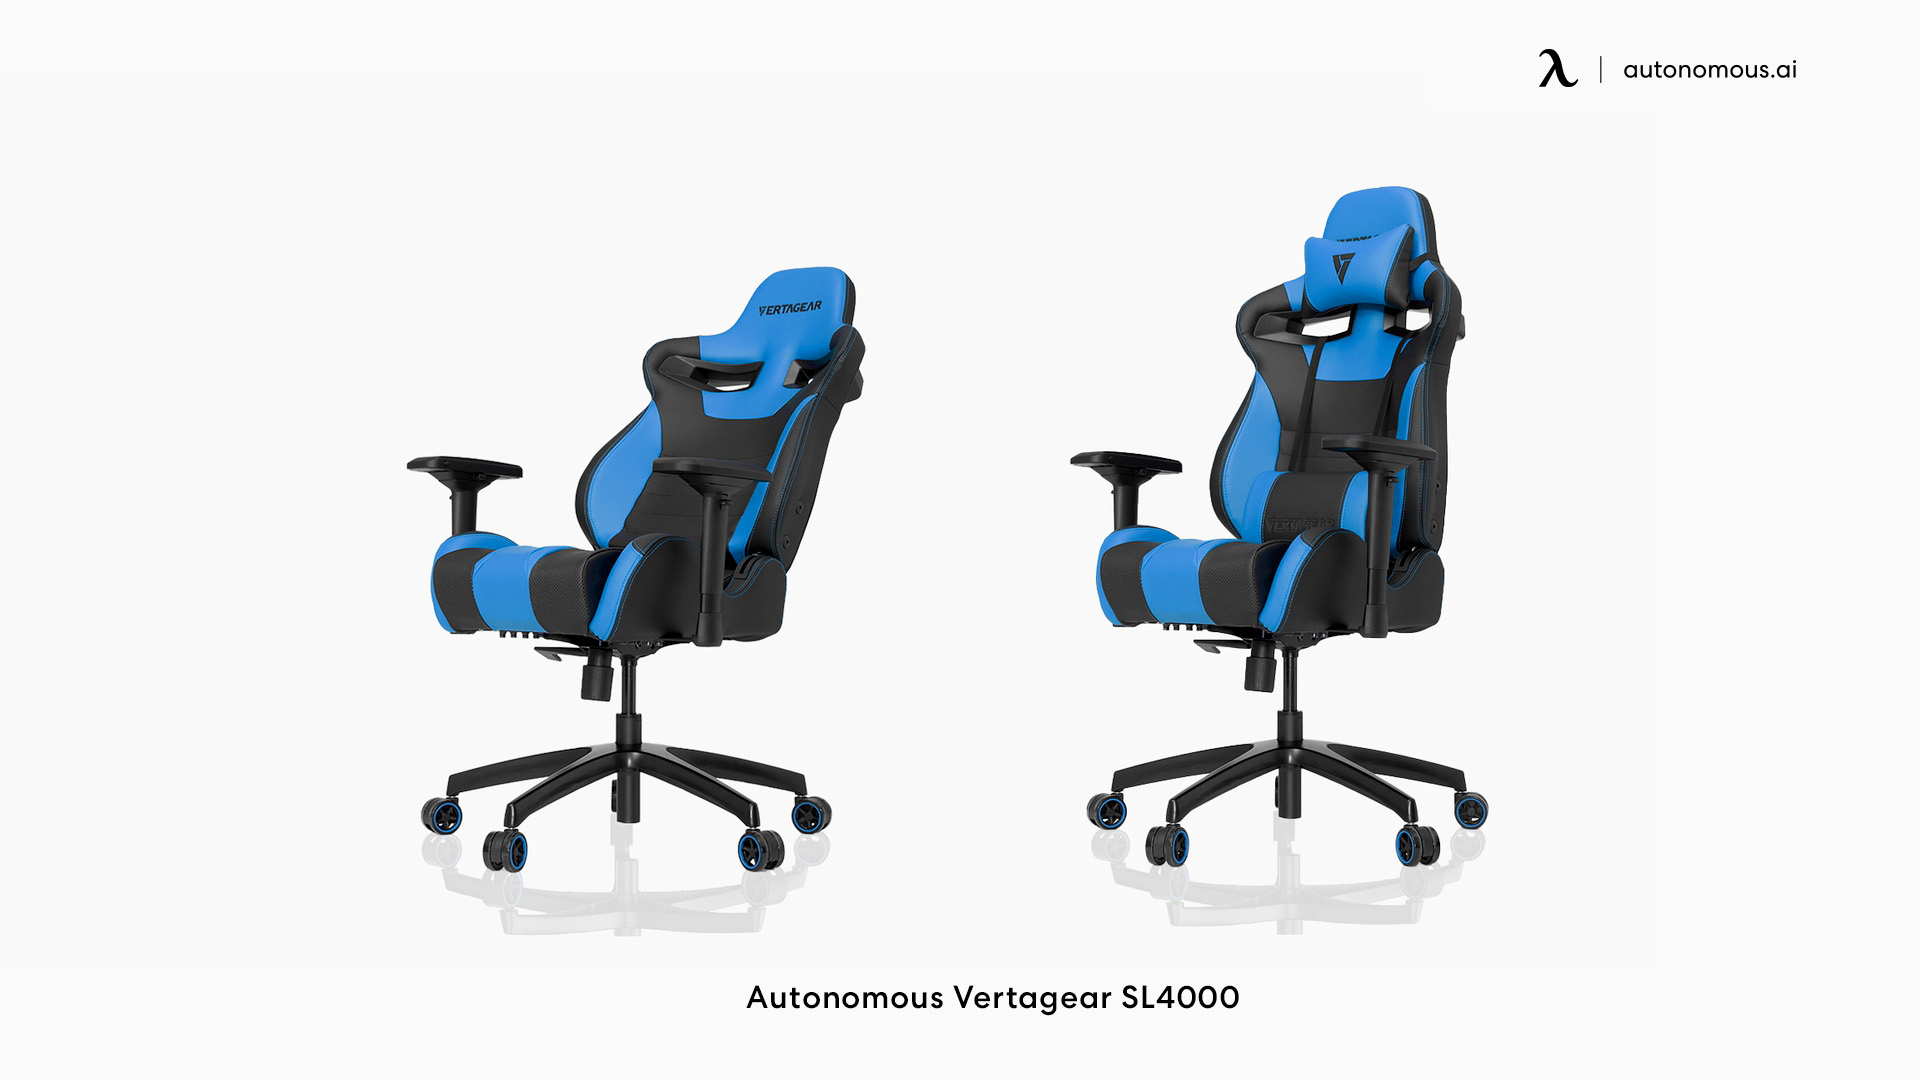 Autonomous Vertagear SL4000 blue gaming chair